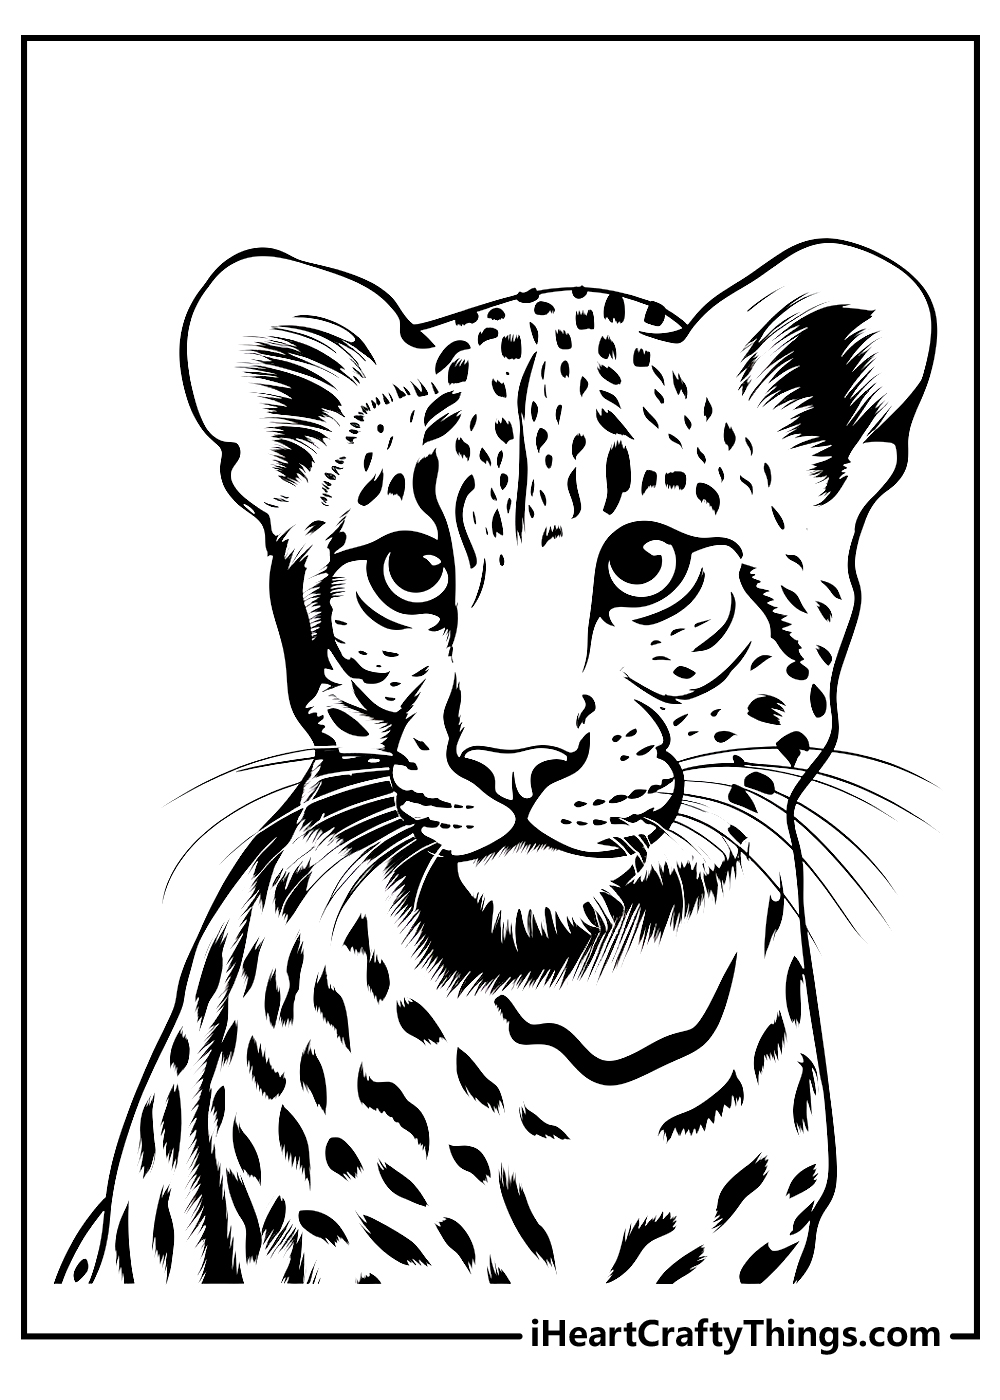 Cheetah coloring pages free printables